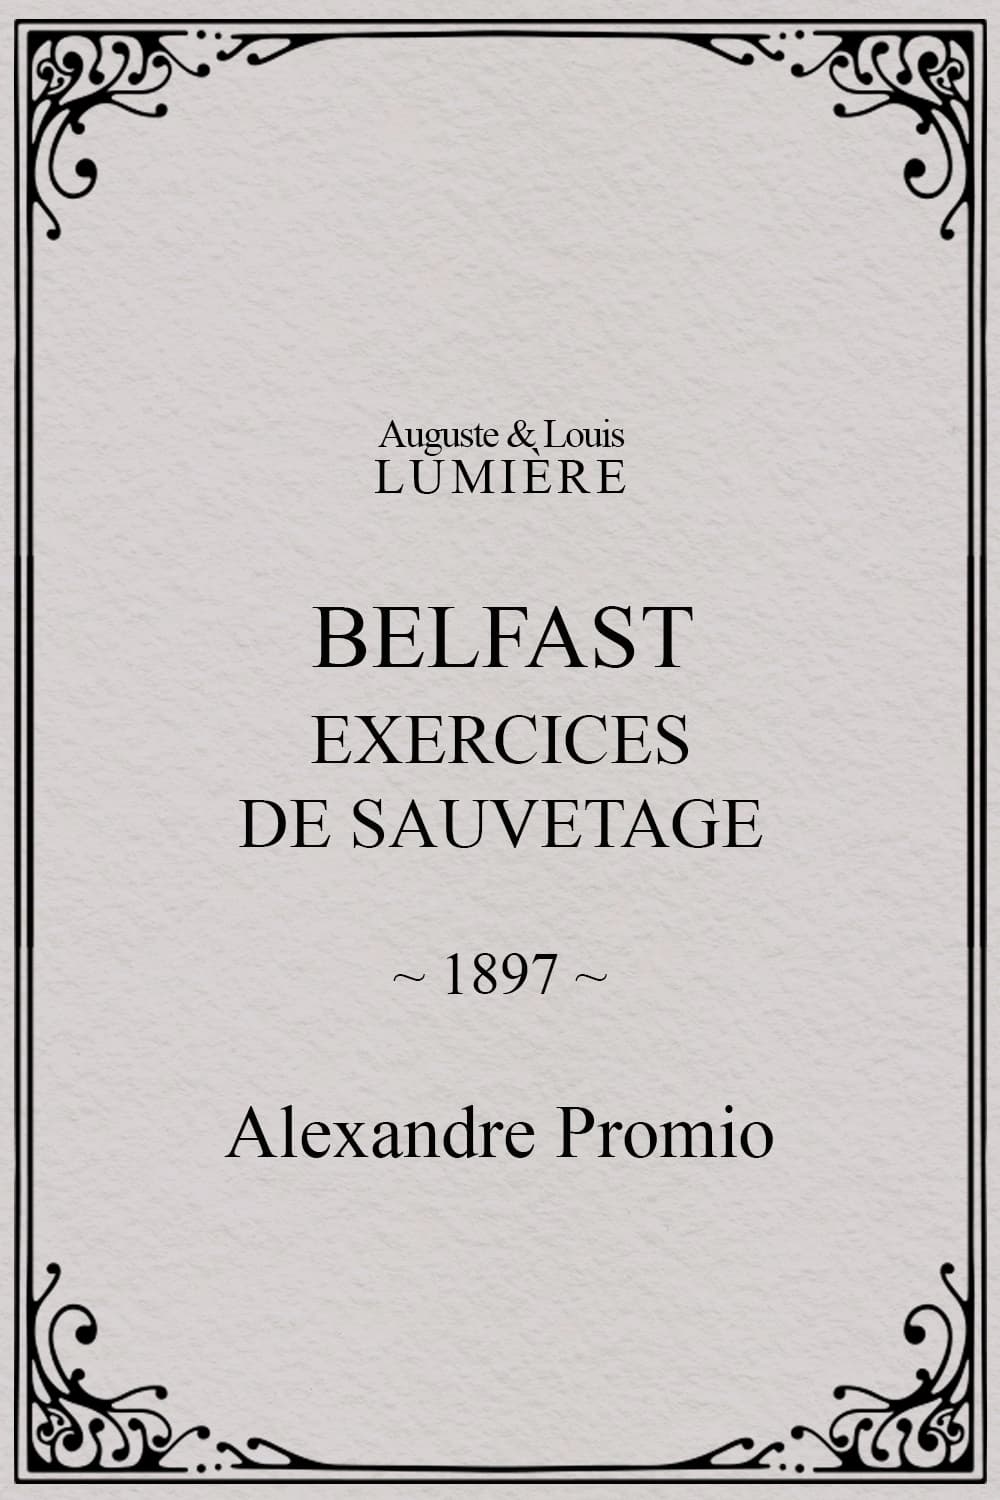 Belfast, exercices de sauvetage (1897)